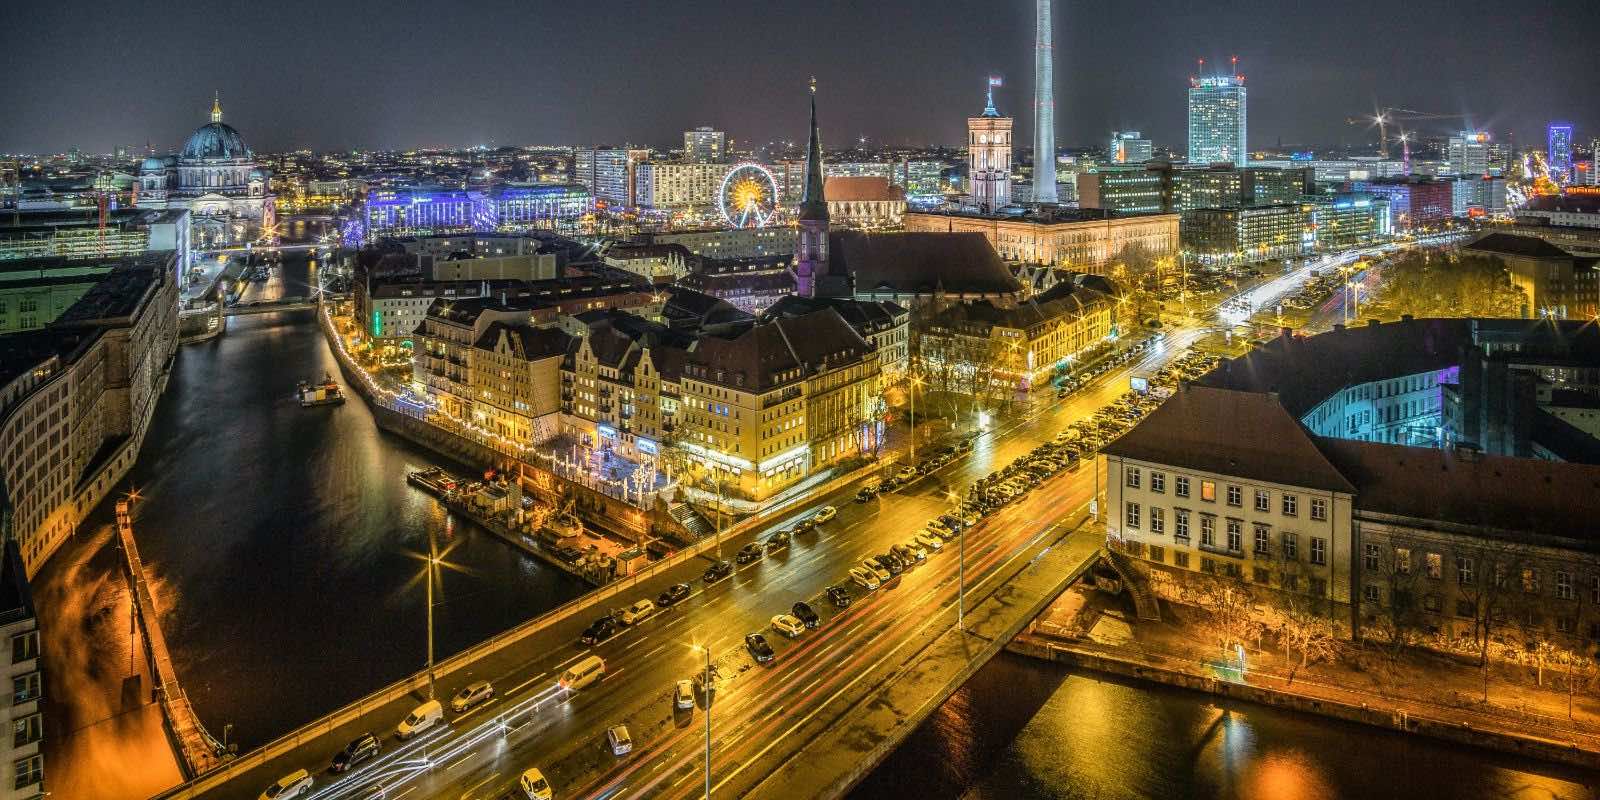 a night view of River Spree to Nikolaiviertel and Alexanderplatz